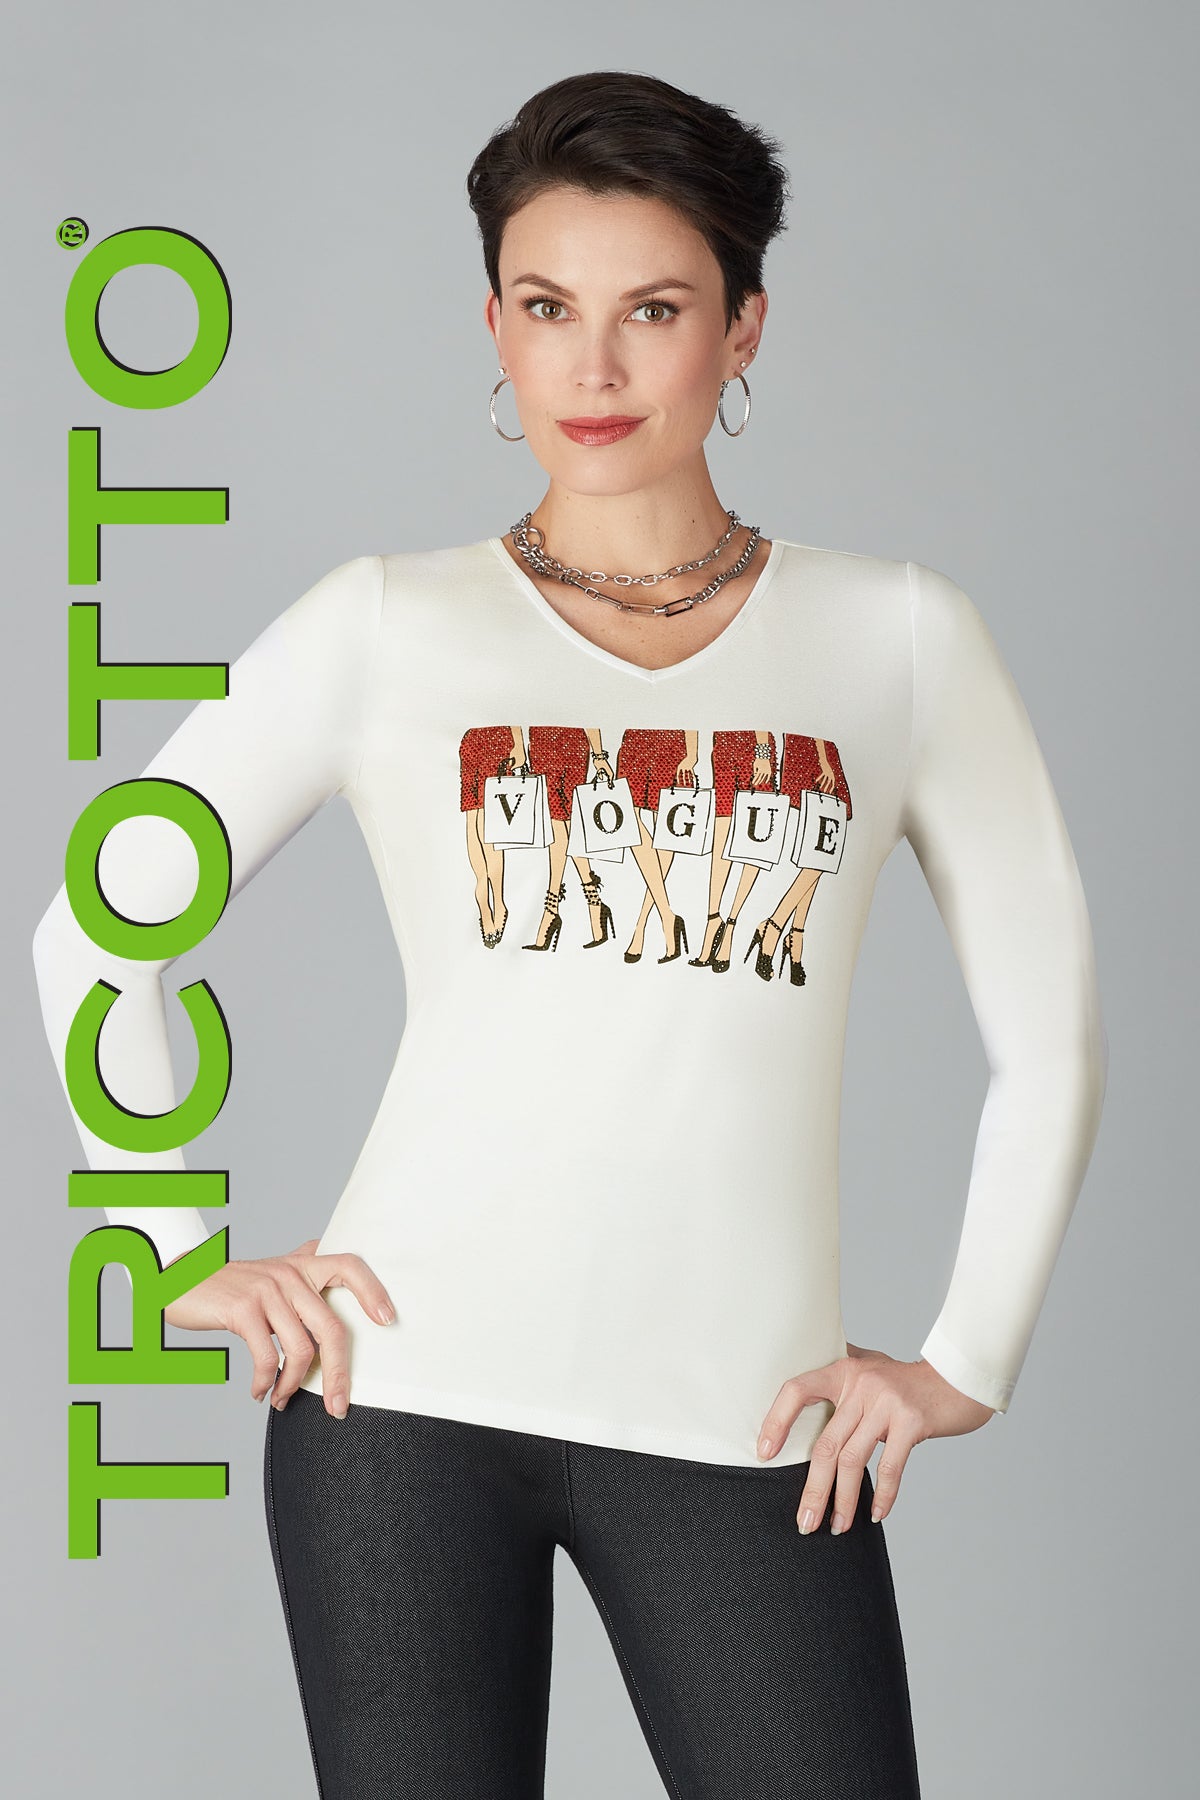 Tricotto Fashion T-shirts-Buy Tricotto T-shirts Online-Online T-shirt Shop-Tricotto Clothing Montreal